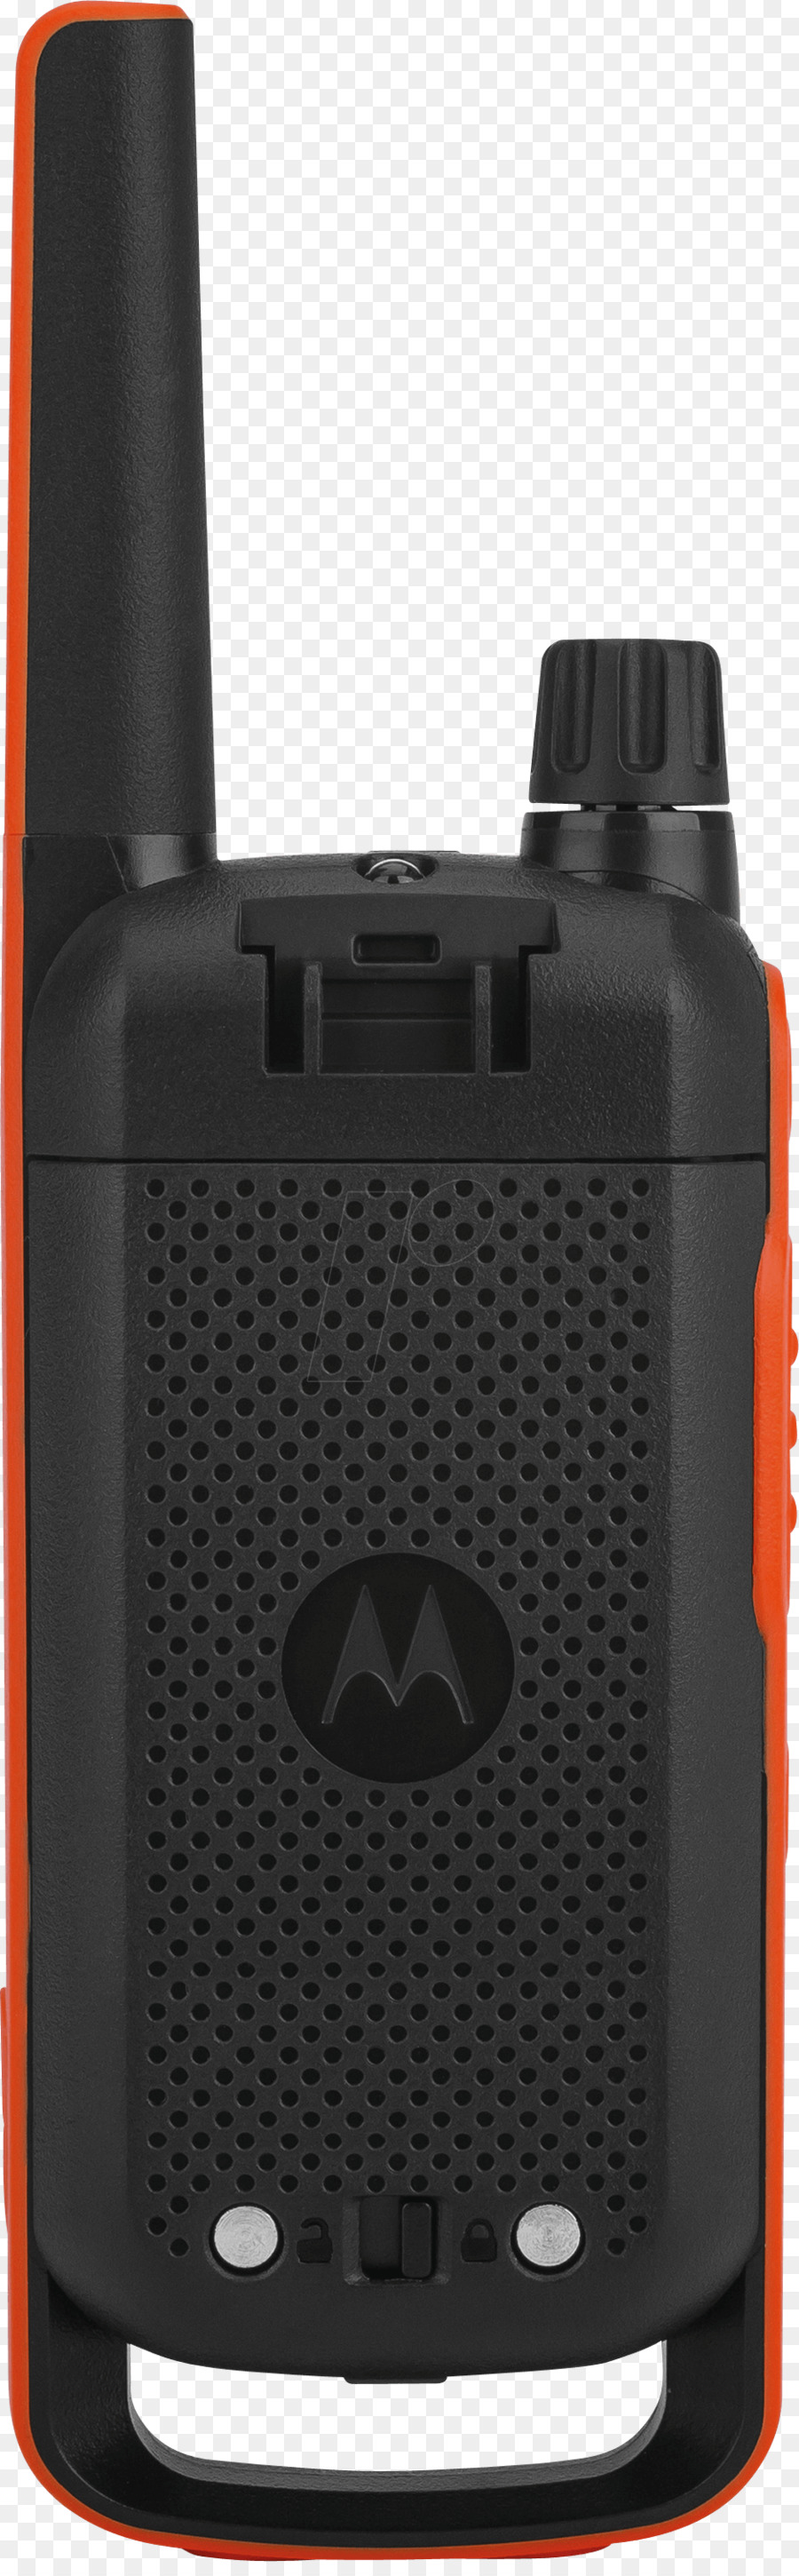 Motorola Talkabout T82 Extreme 188069 Technology